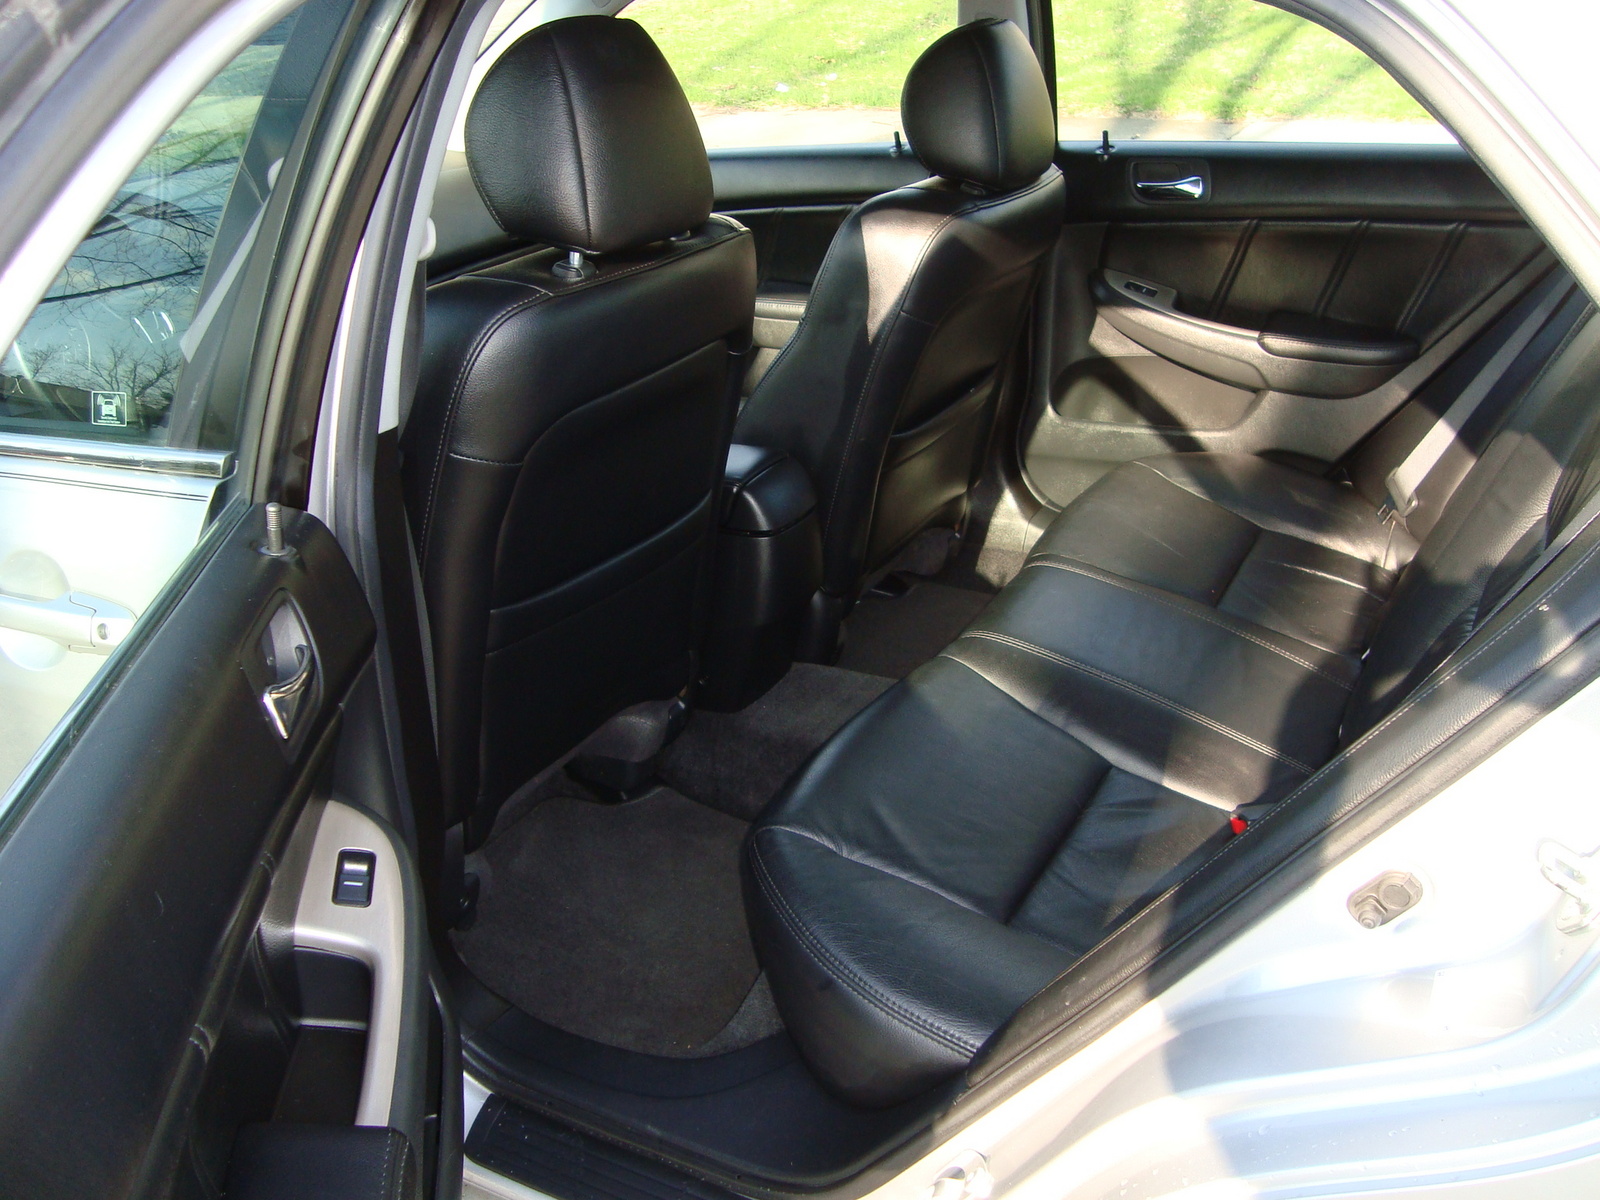 2006 Honda accord leather interior #3